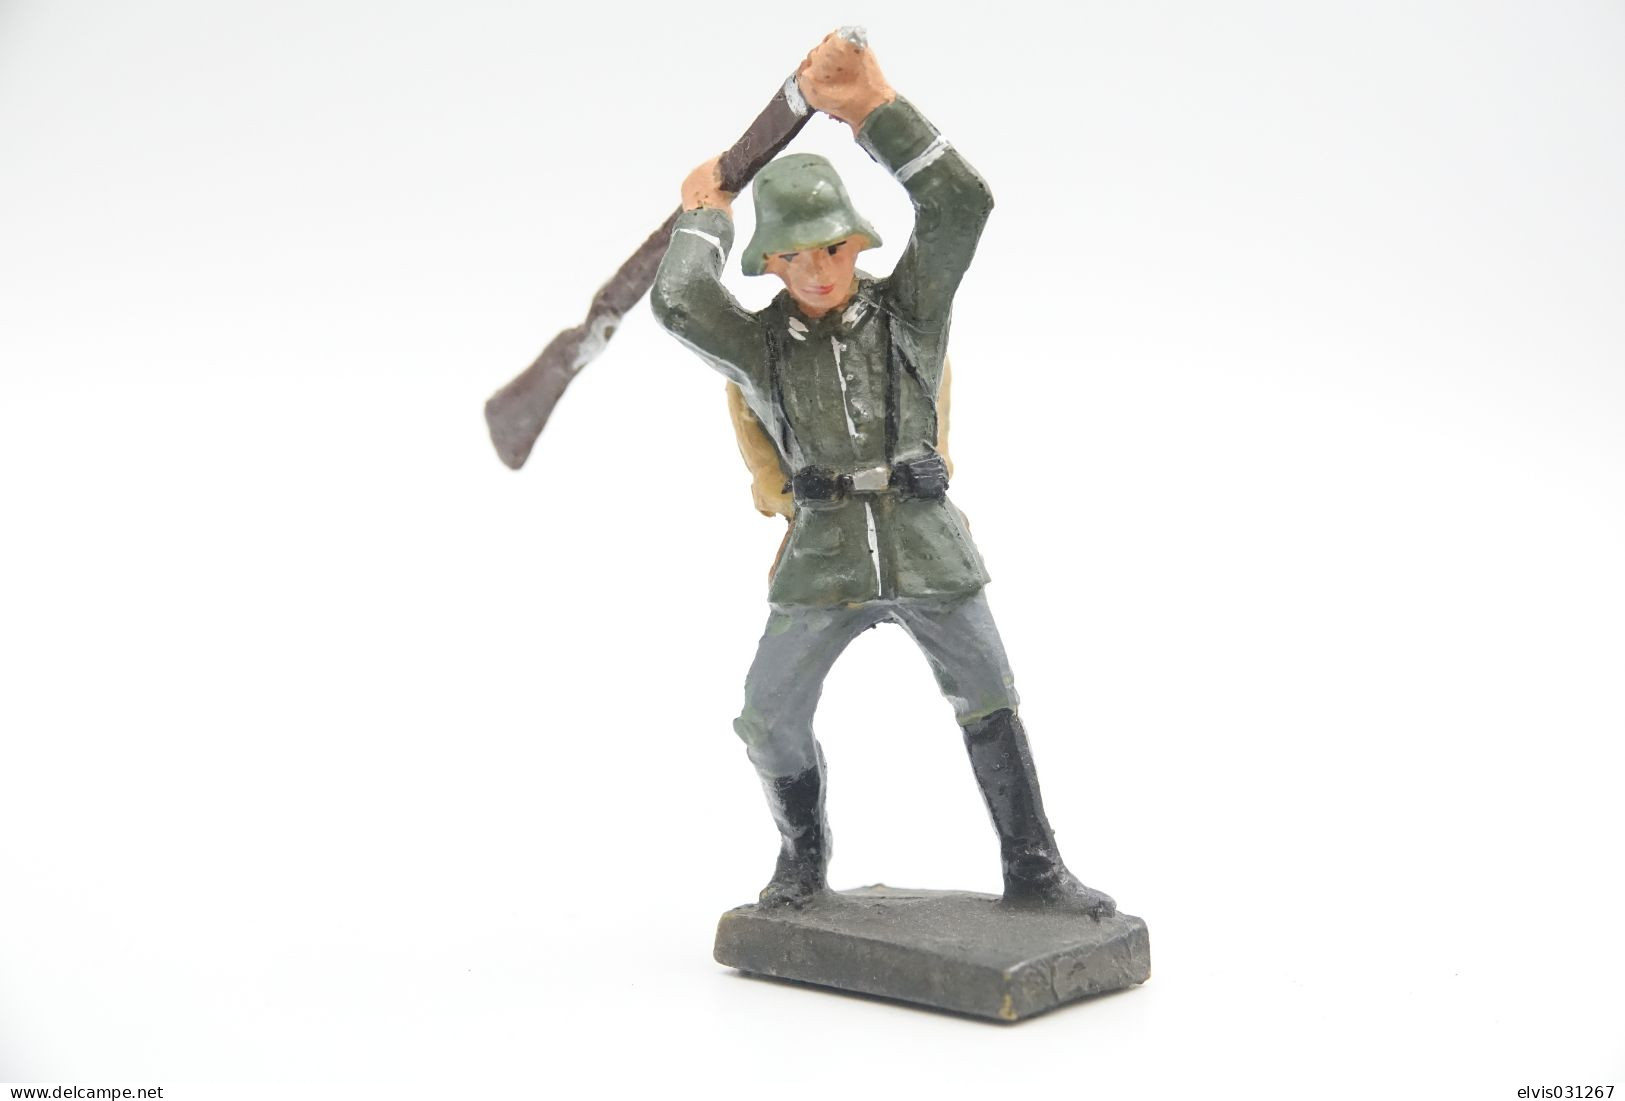 Durolin, German With Rifle, Vintage Toy Soldier, Prewar - 1930's, Like Elastolin, Lineol Hauser - Small Figures